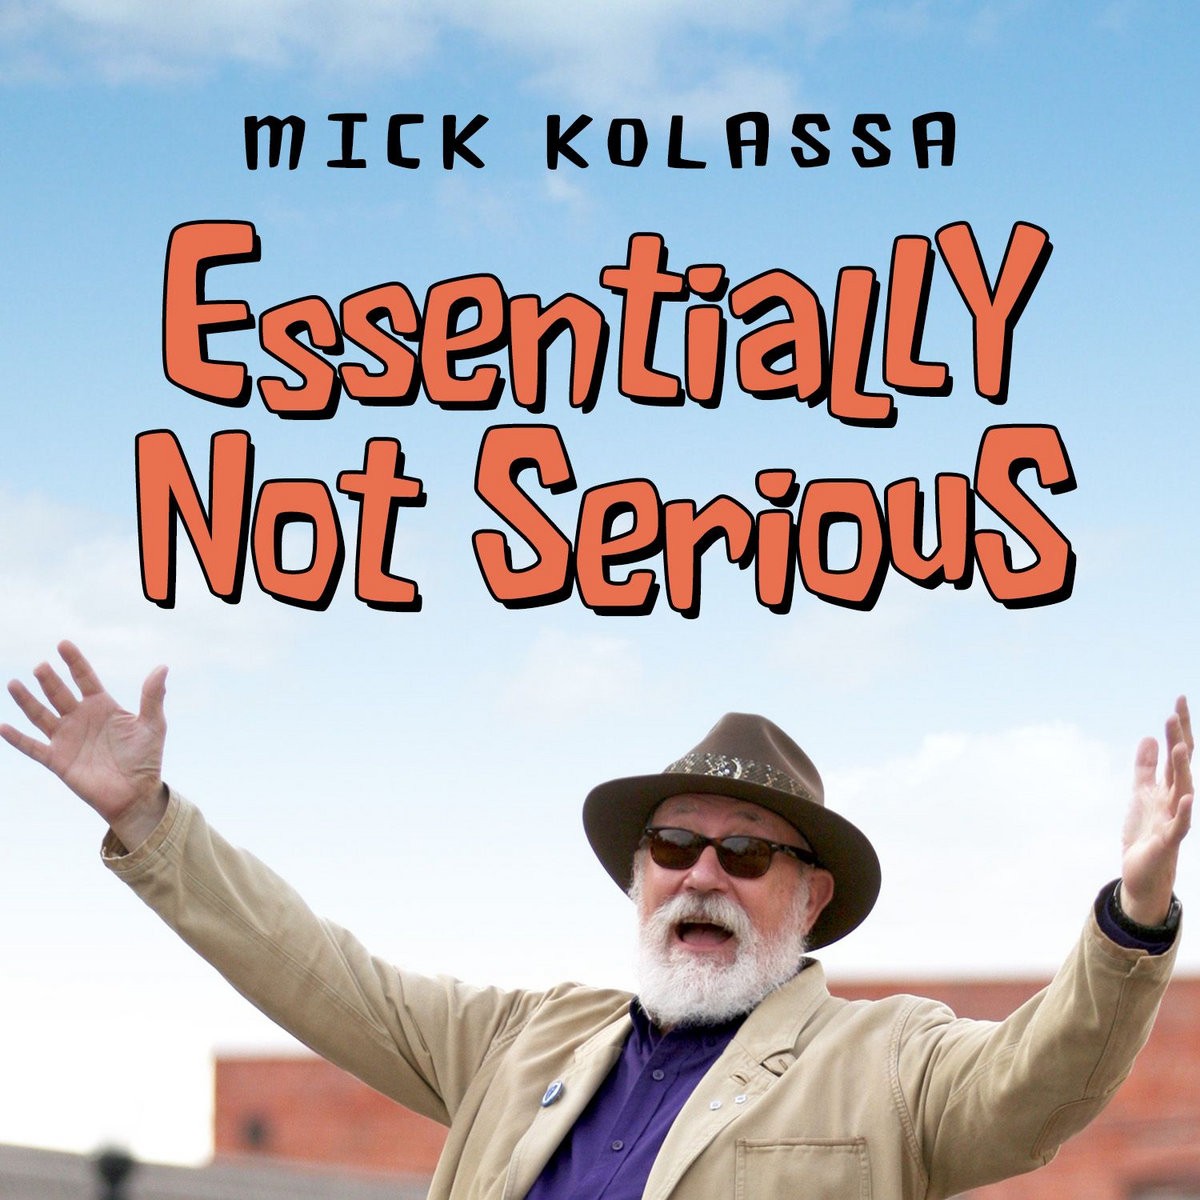 Mick Kolassa - Essentially Not Serious